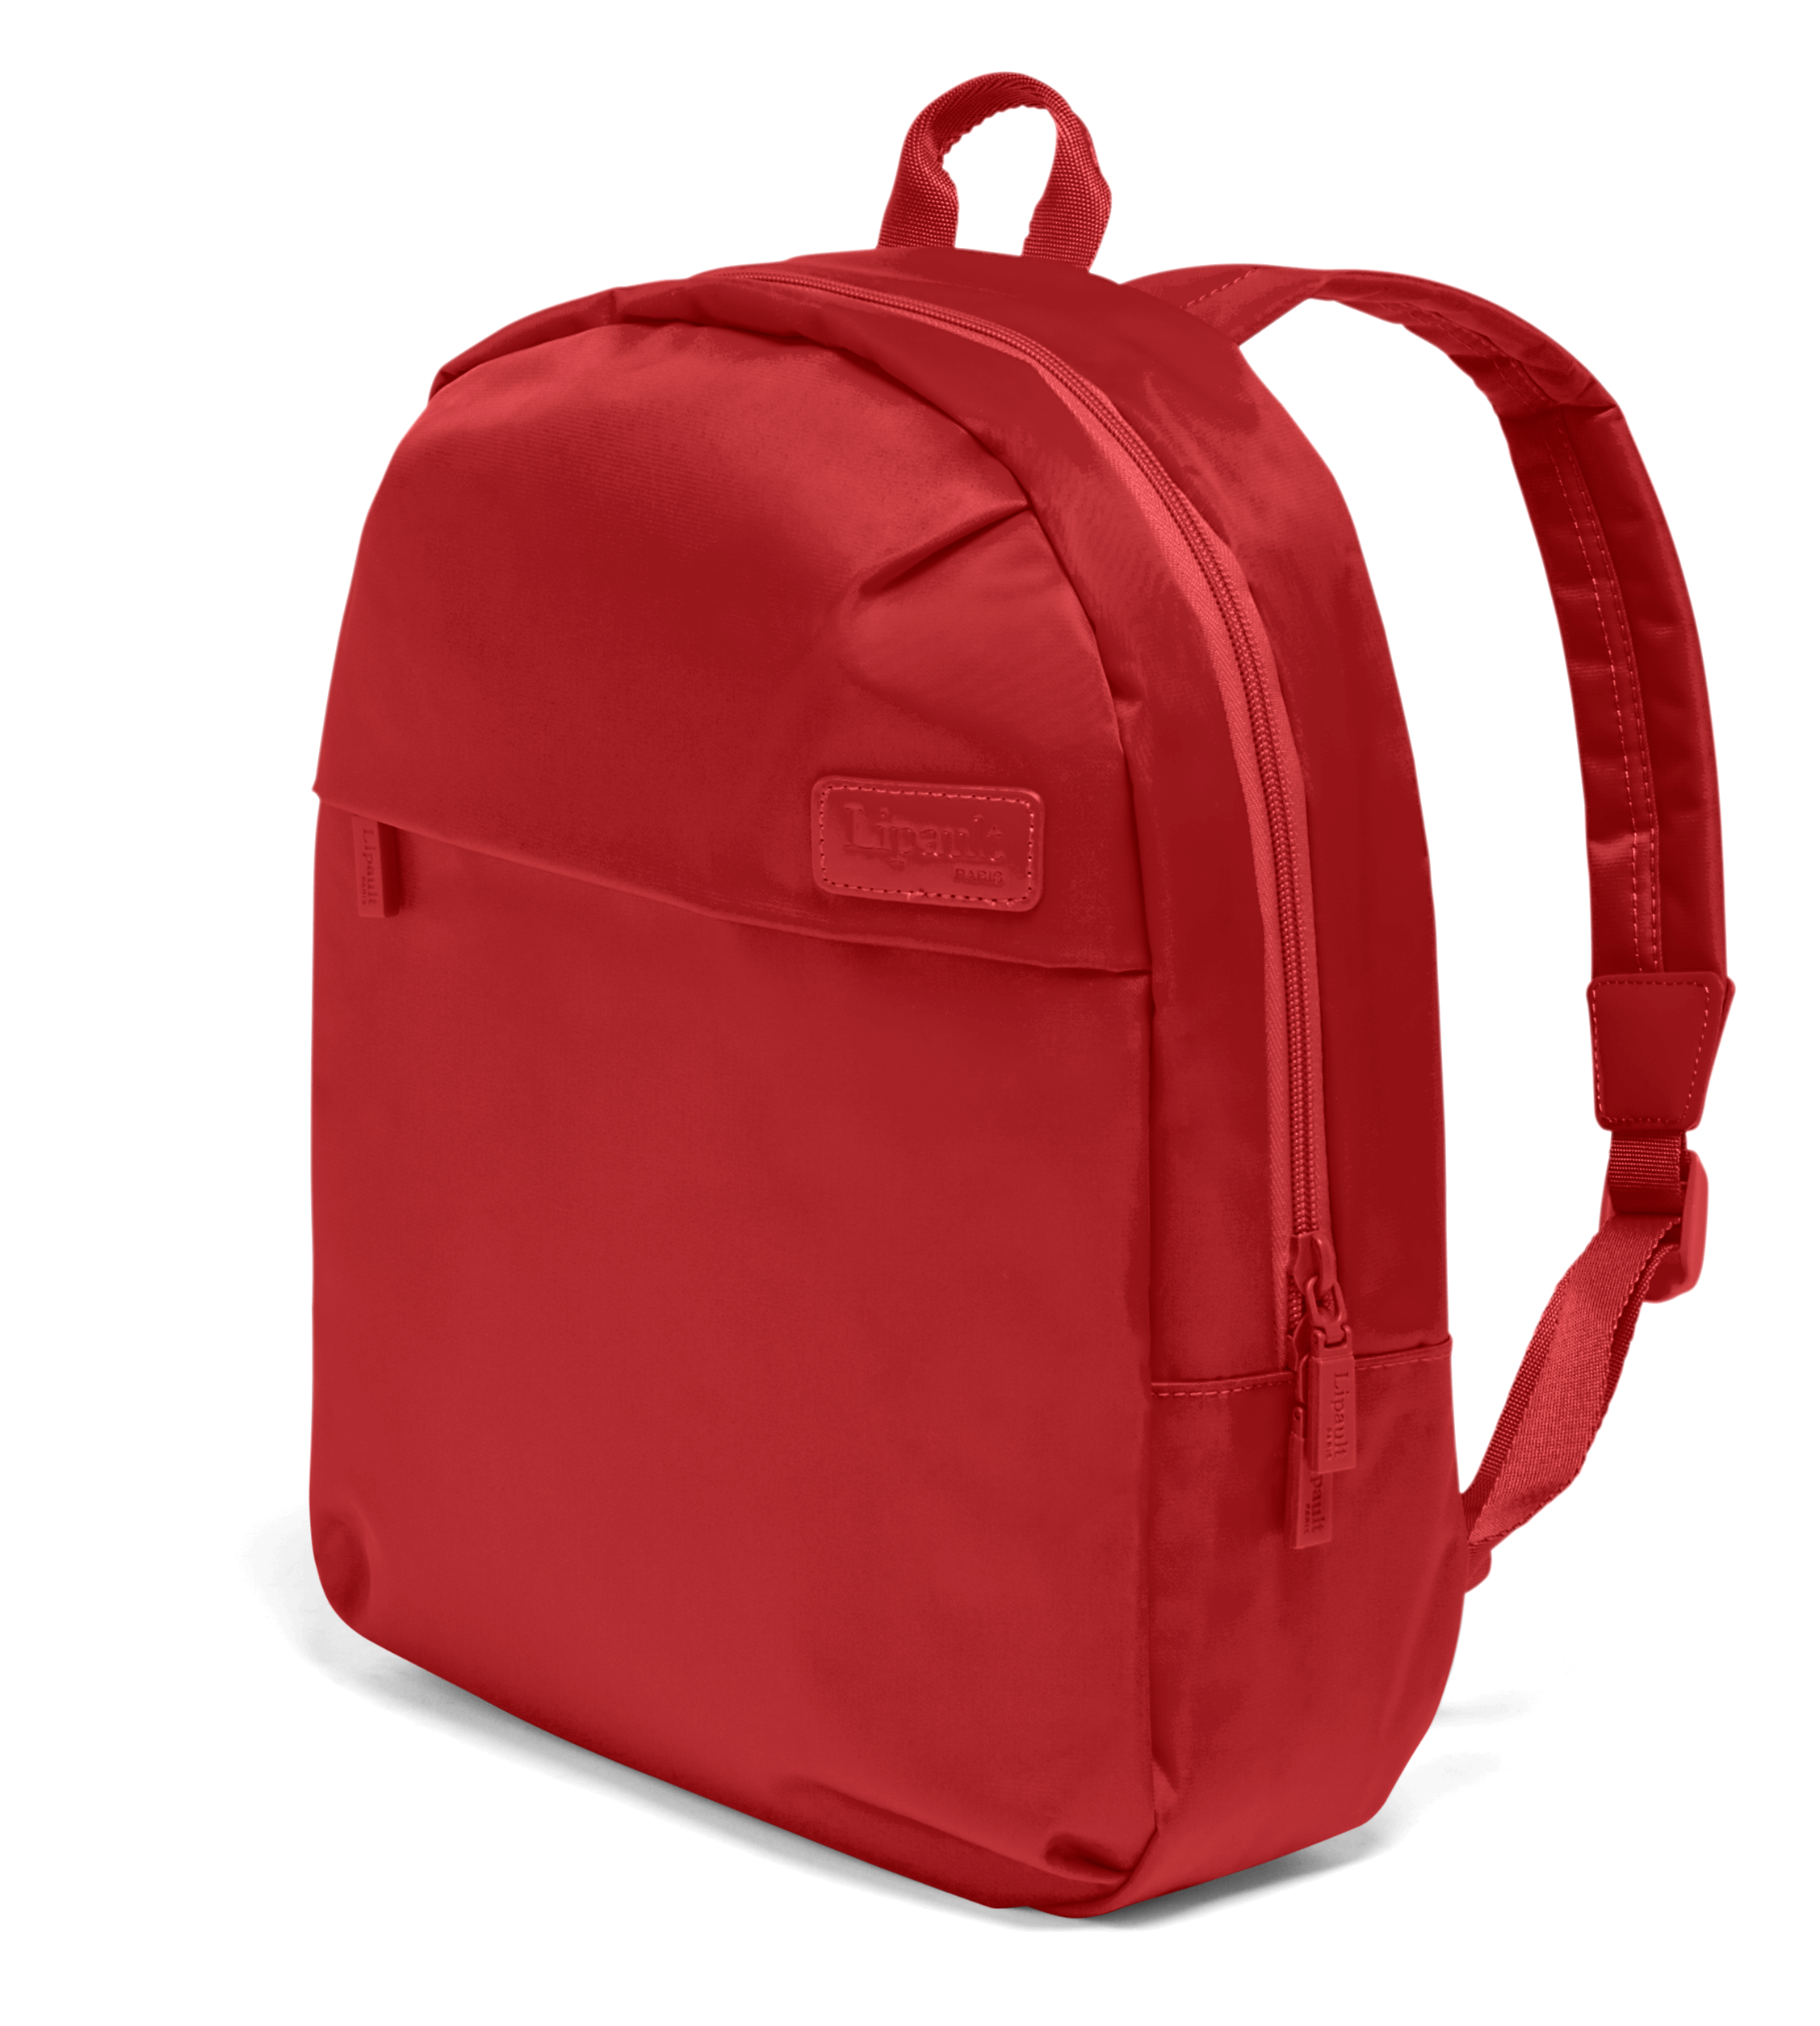 City Plume Backpack Medium Over Shoulder Purse Bag for Women Lipault Paris 74606-1041 Lipault 